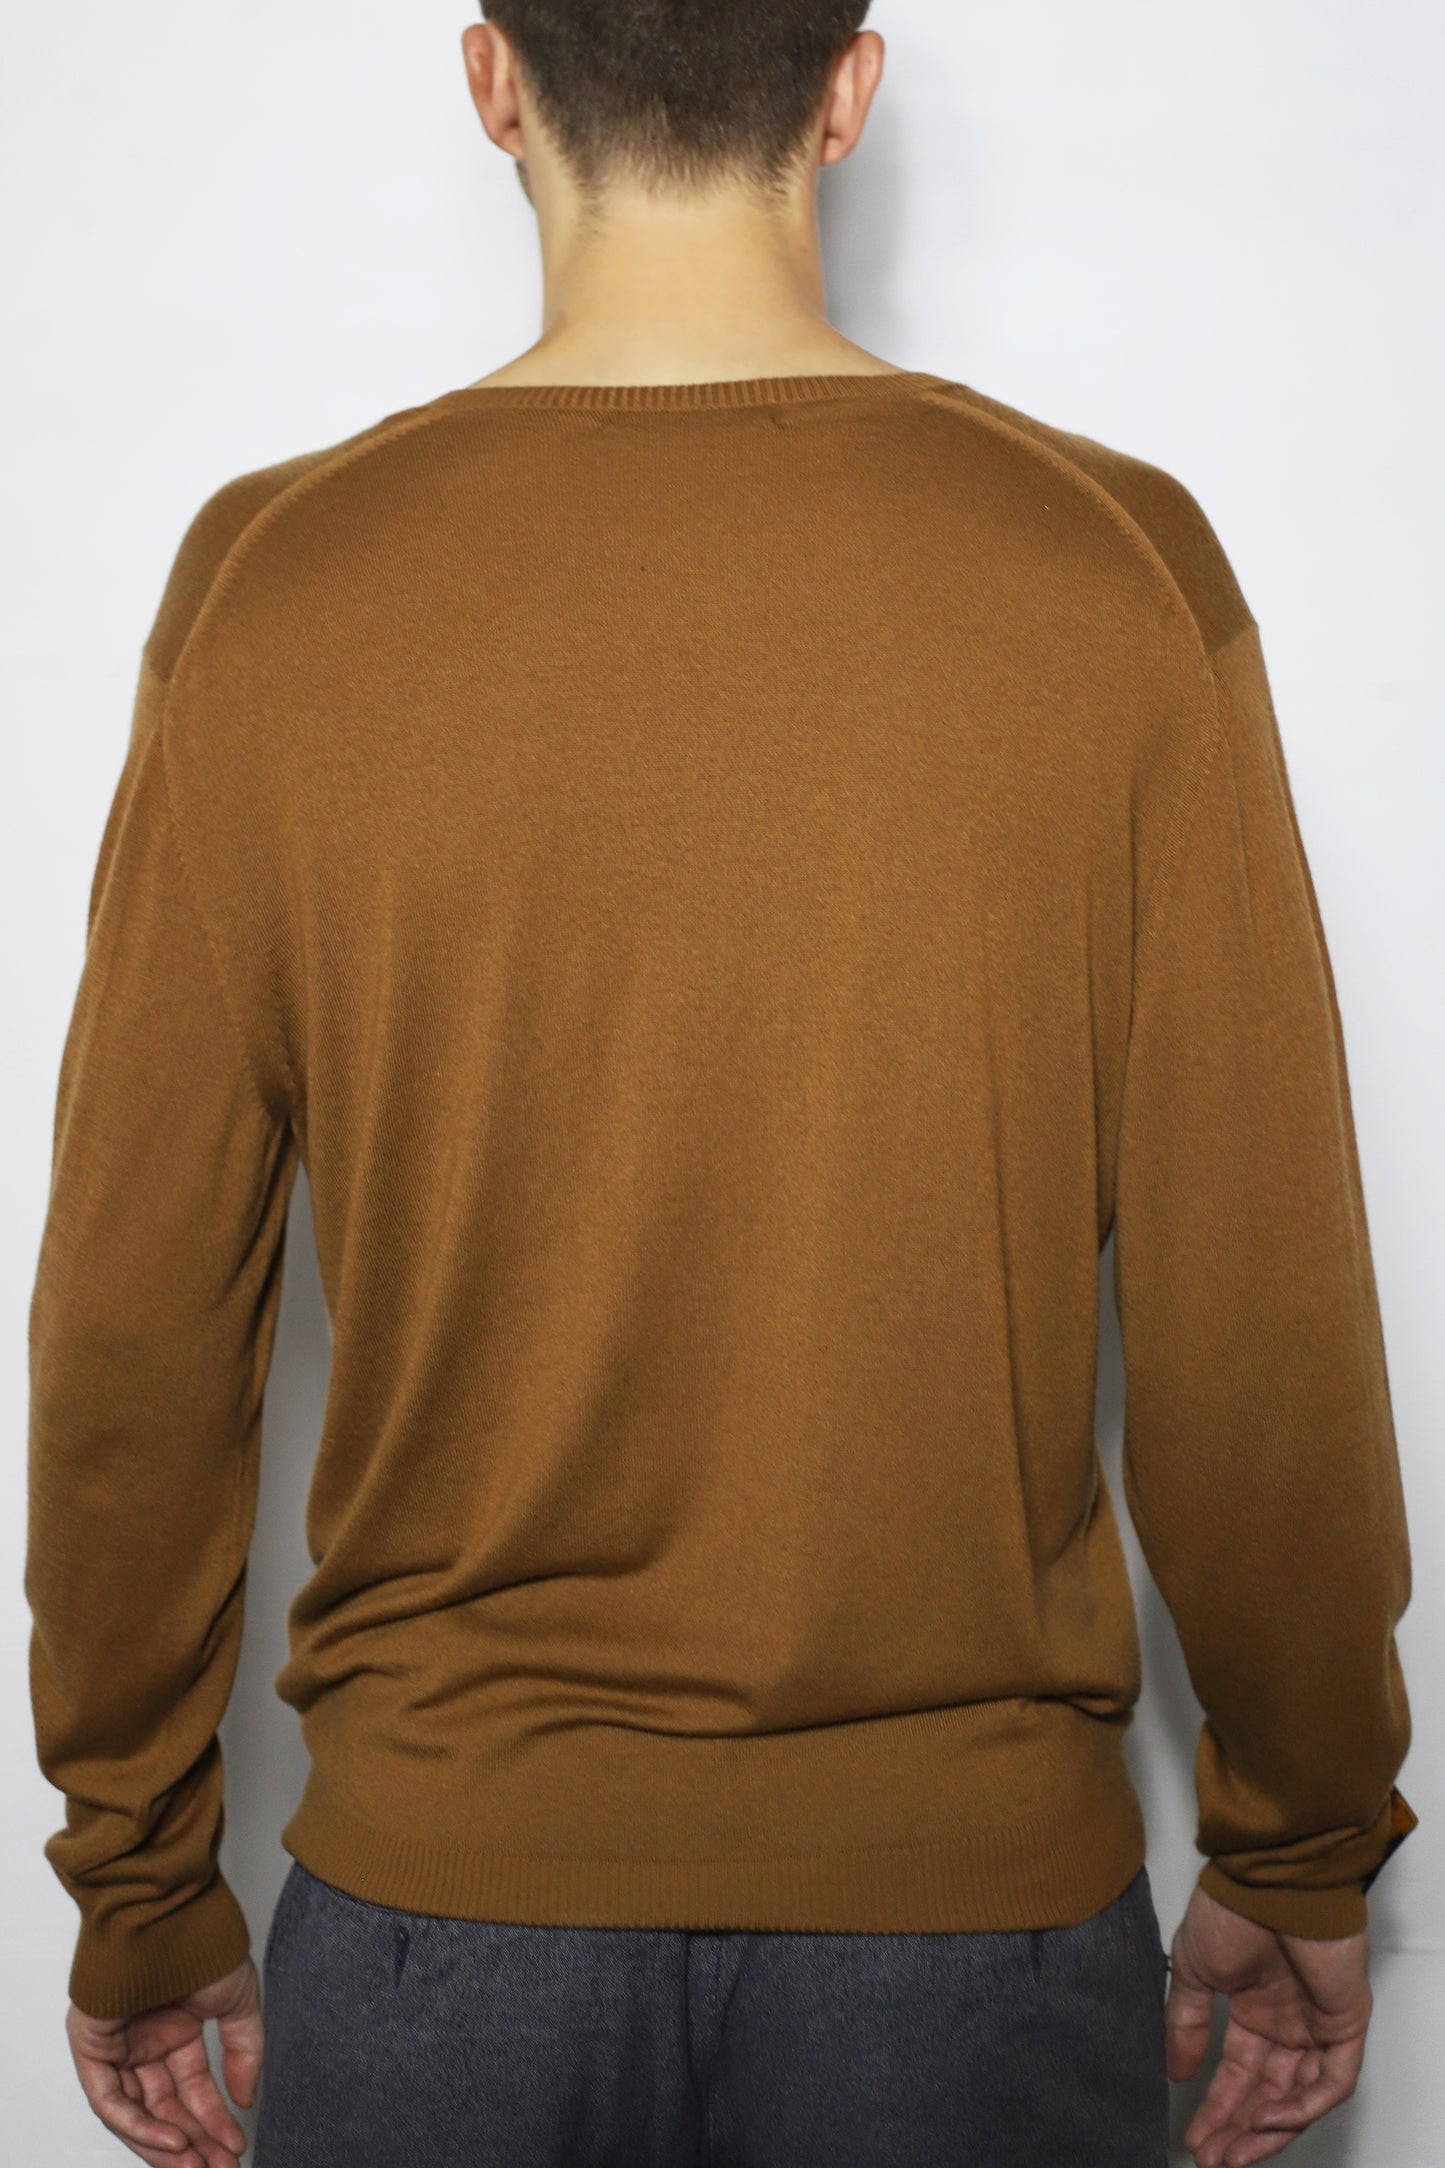 The Vicuña Sweatshirt